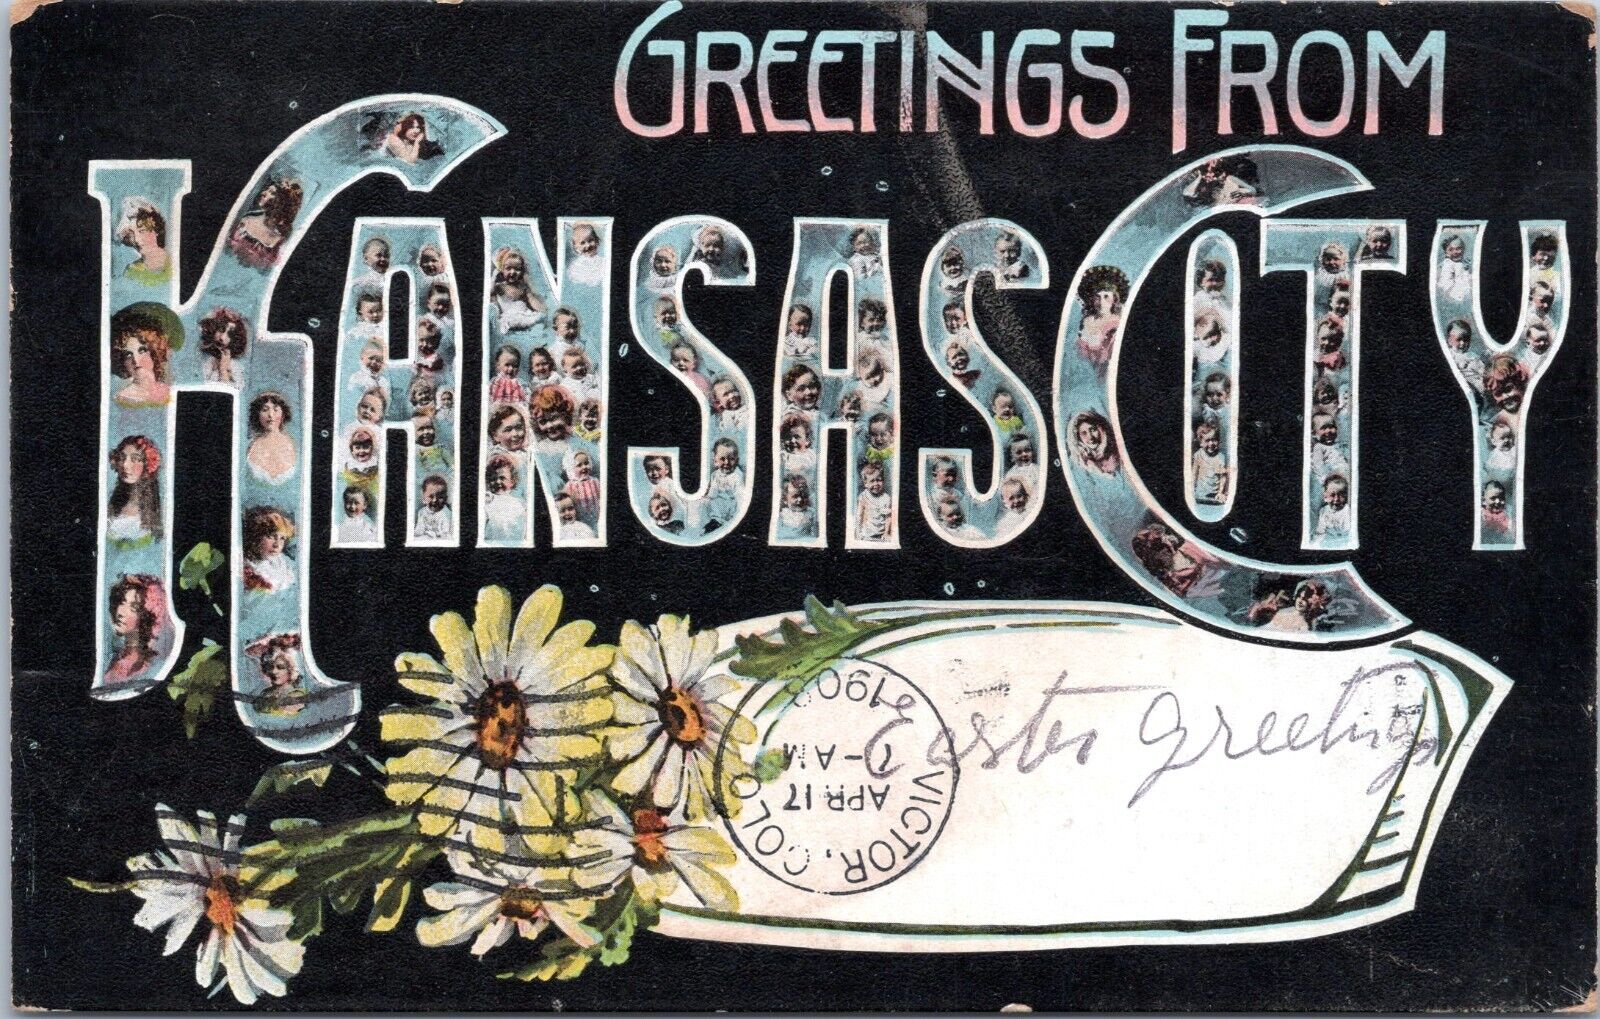 Large Letter Greetings, Kansas City, Missouri- 1908 Posted Postcard- Faces